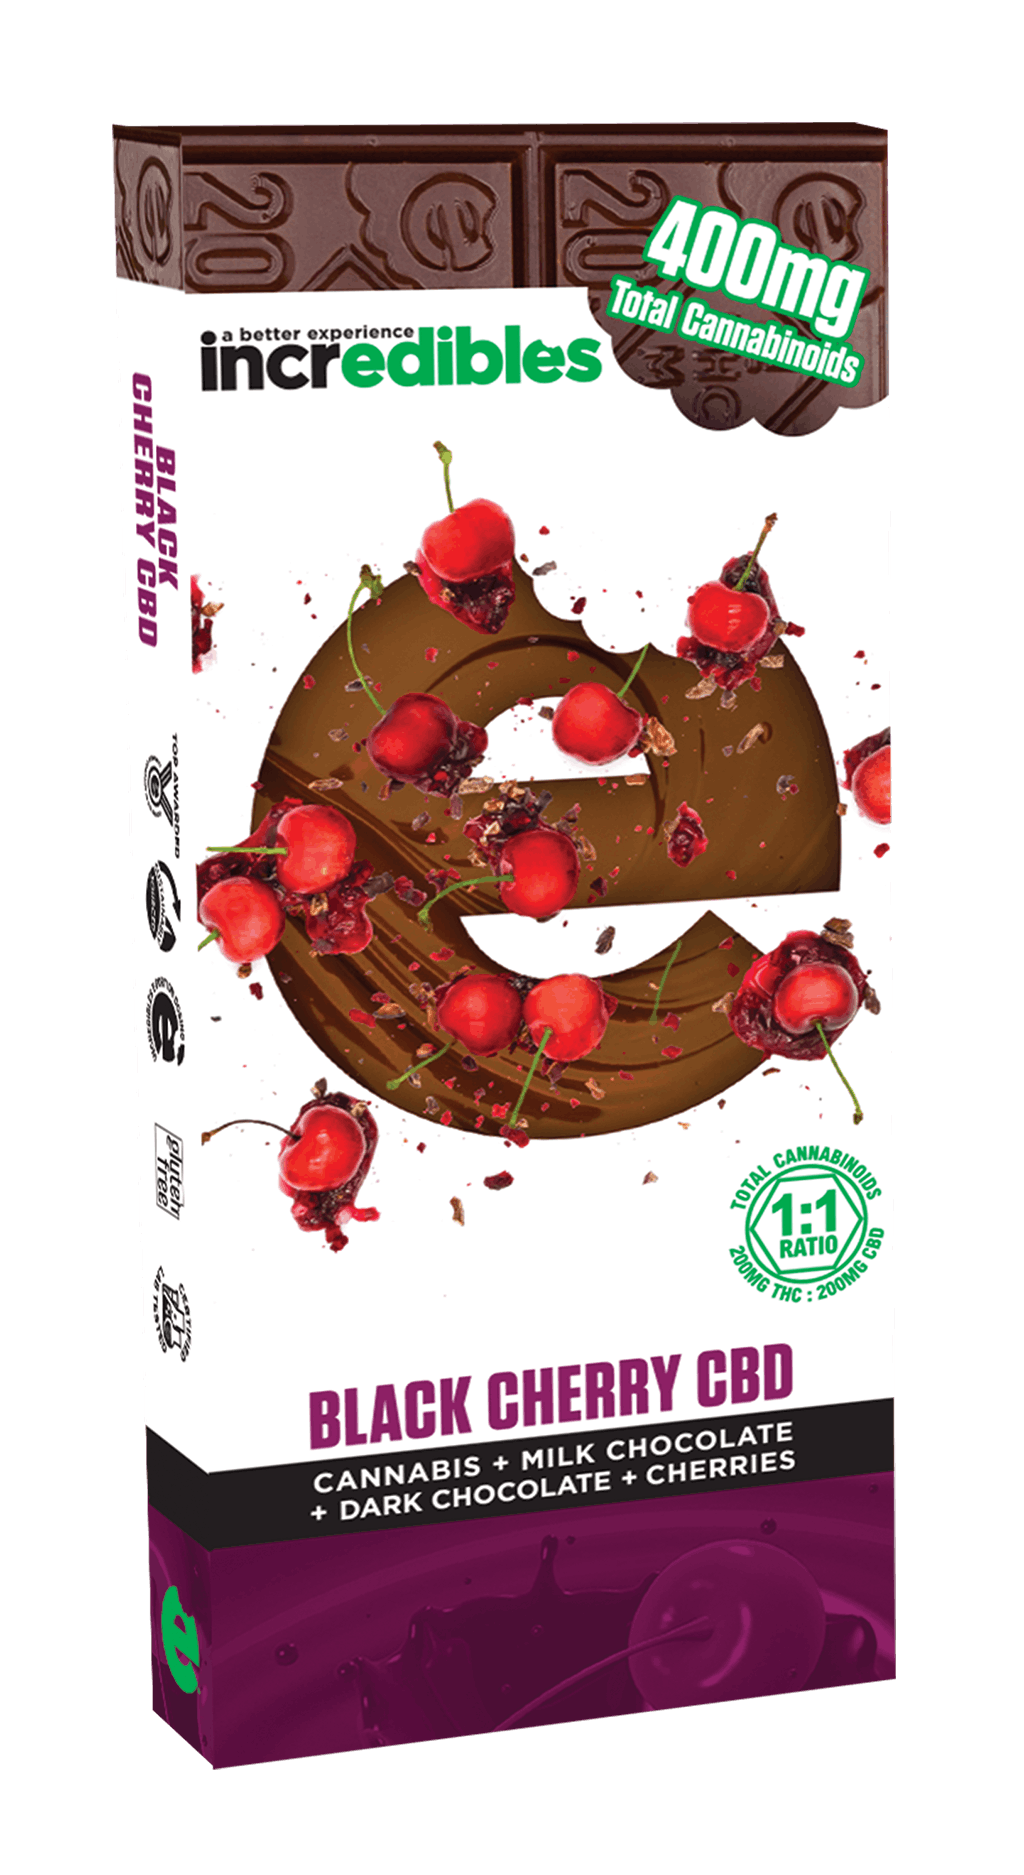 edible-incredibles-400mg-bar-black-cherry-thccbd